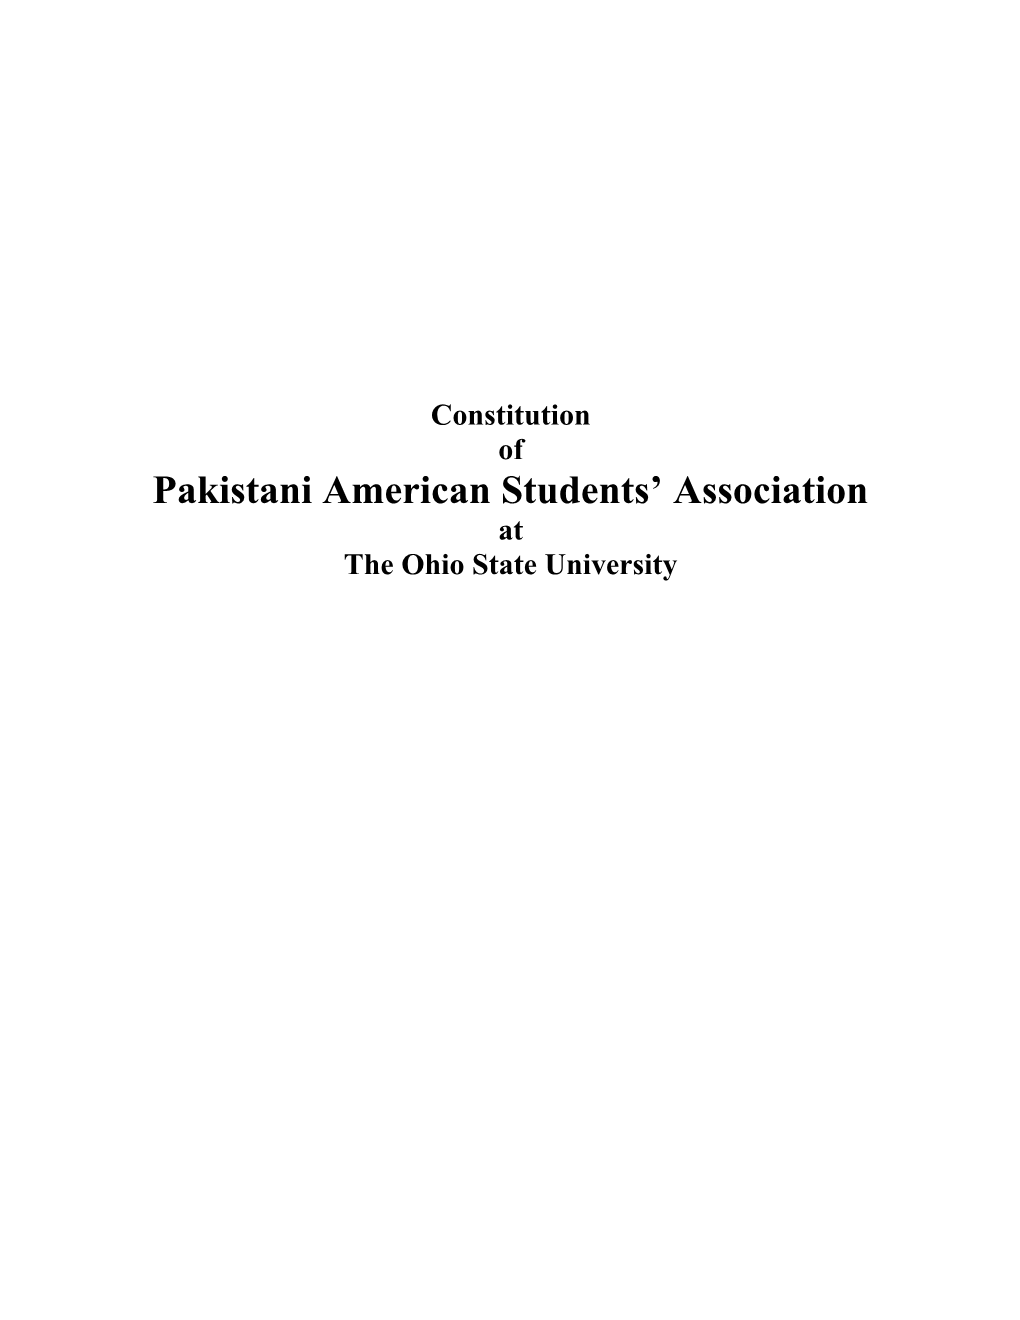 Pakistani American Students Association